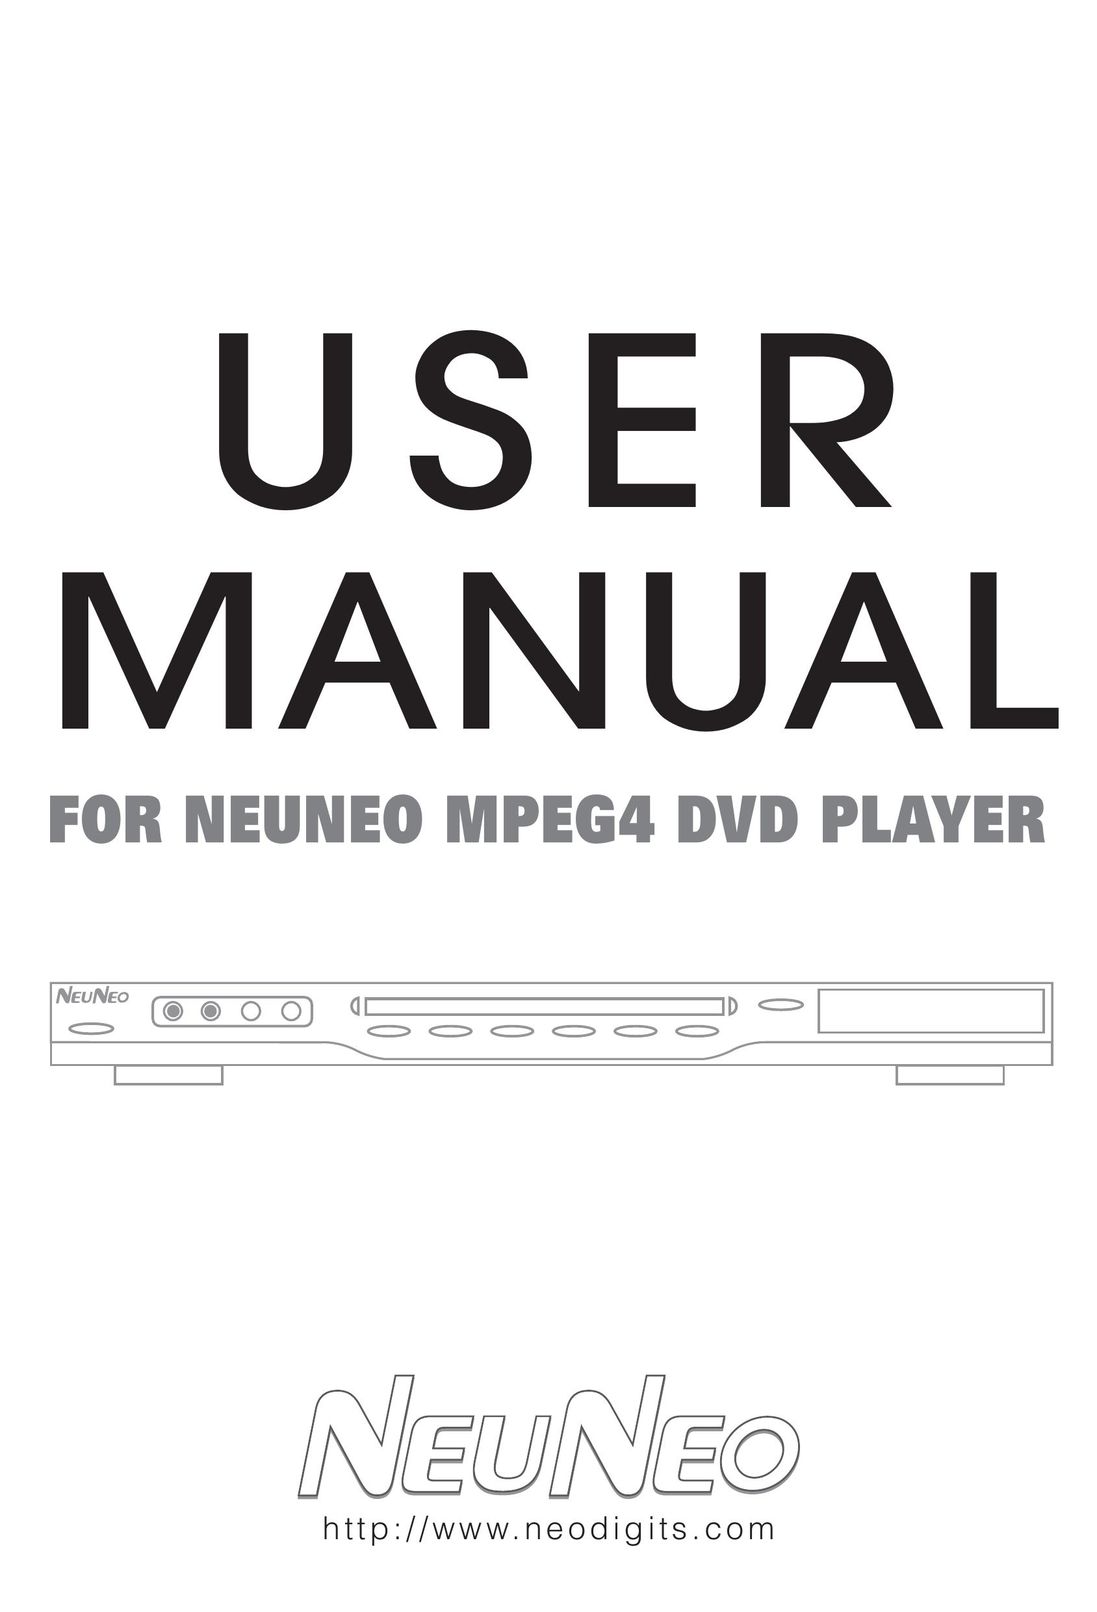 NeoDigits.com NEUNEO MPEG4 DVD Player User Manual